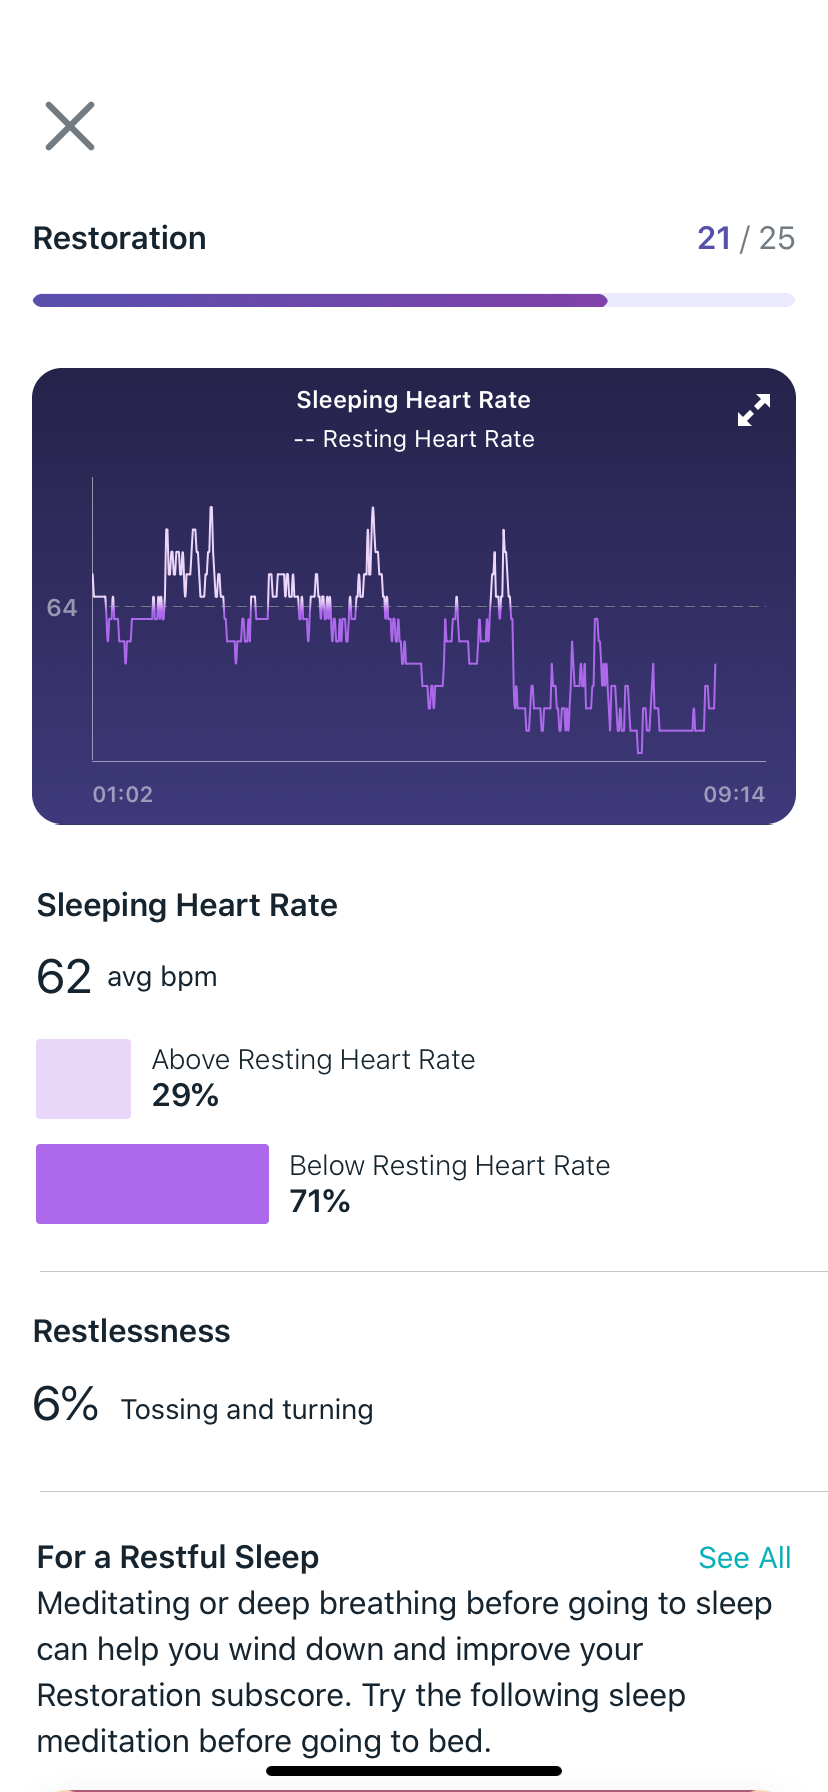 Sleep Restoration Heart Rate graph is 